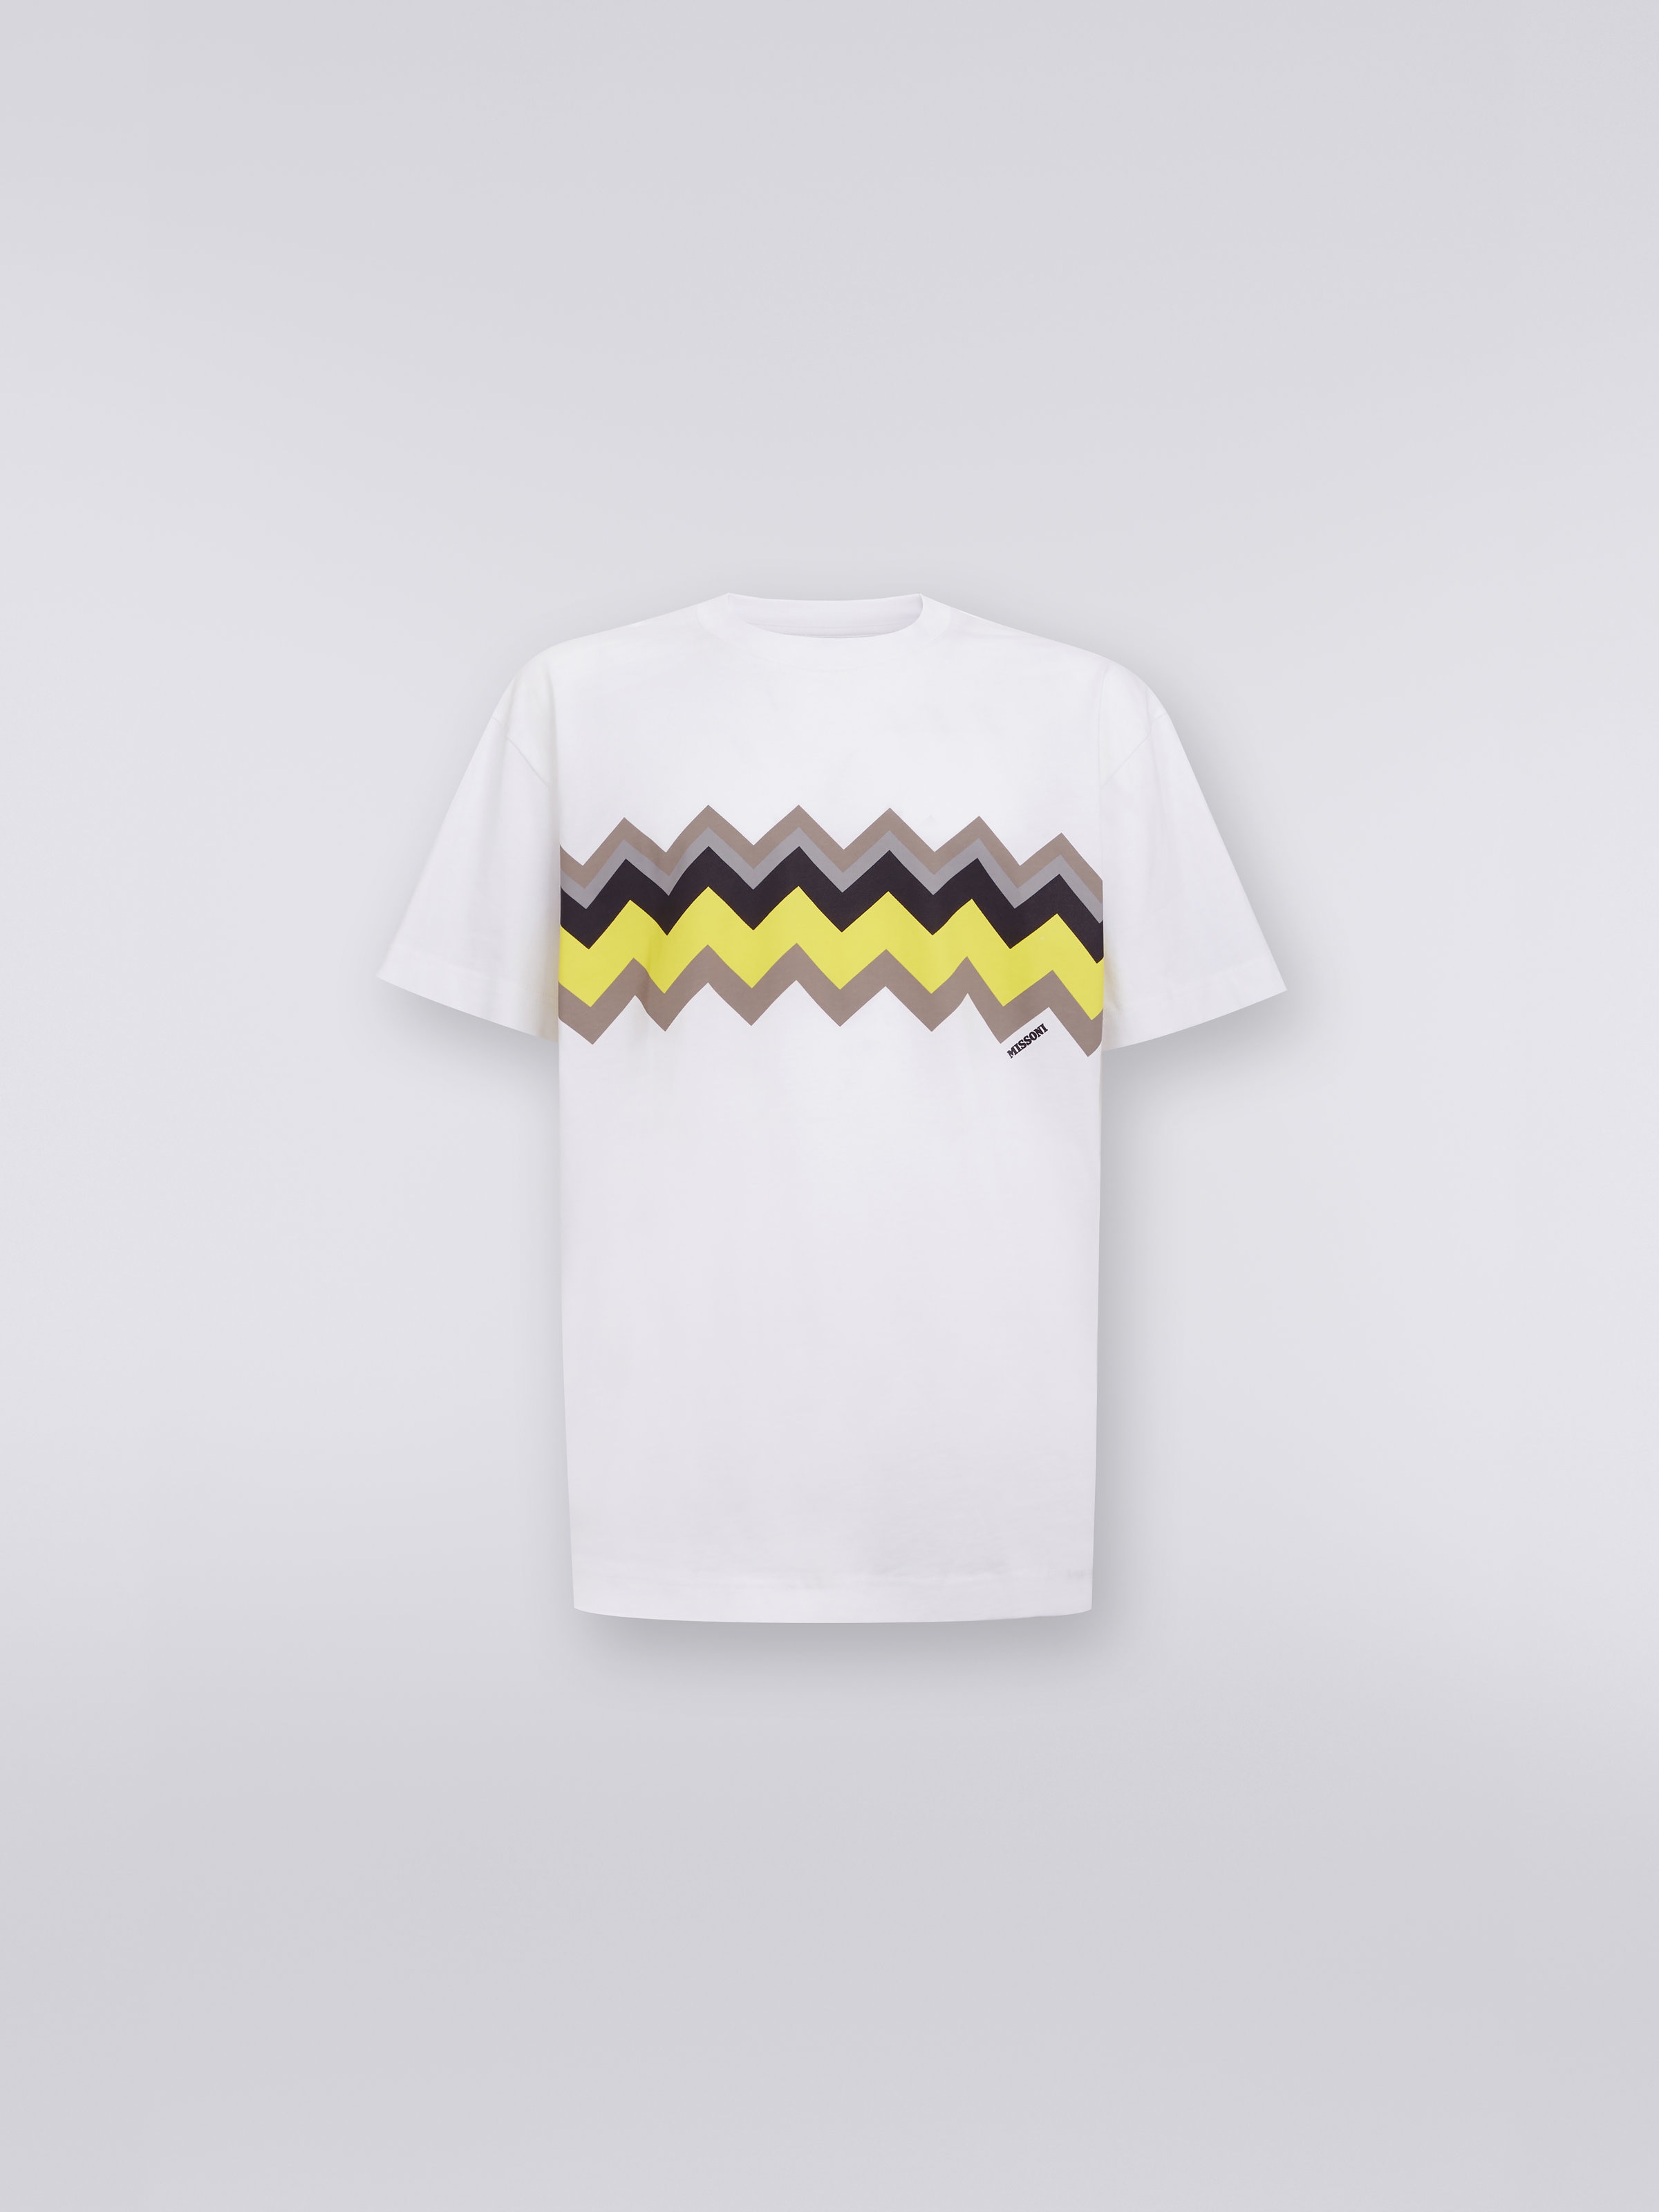 Zigzag cotton jersey crew-neck T-shirt, White, Yellow & Grey - 0